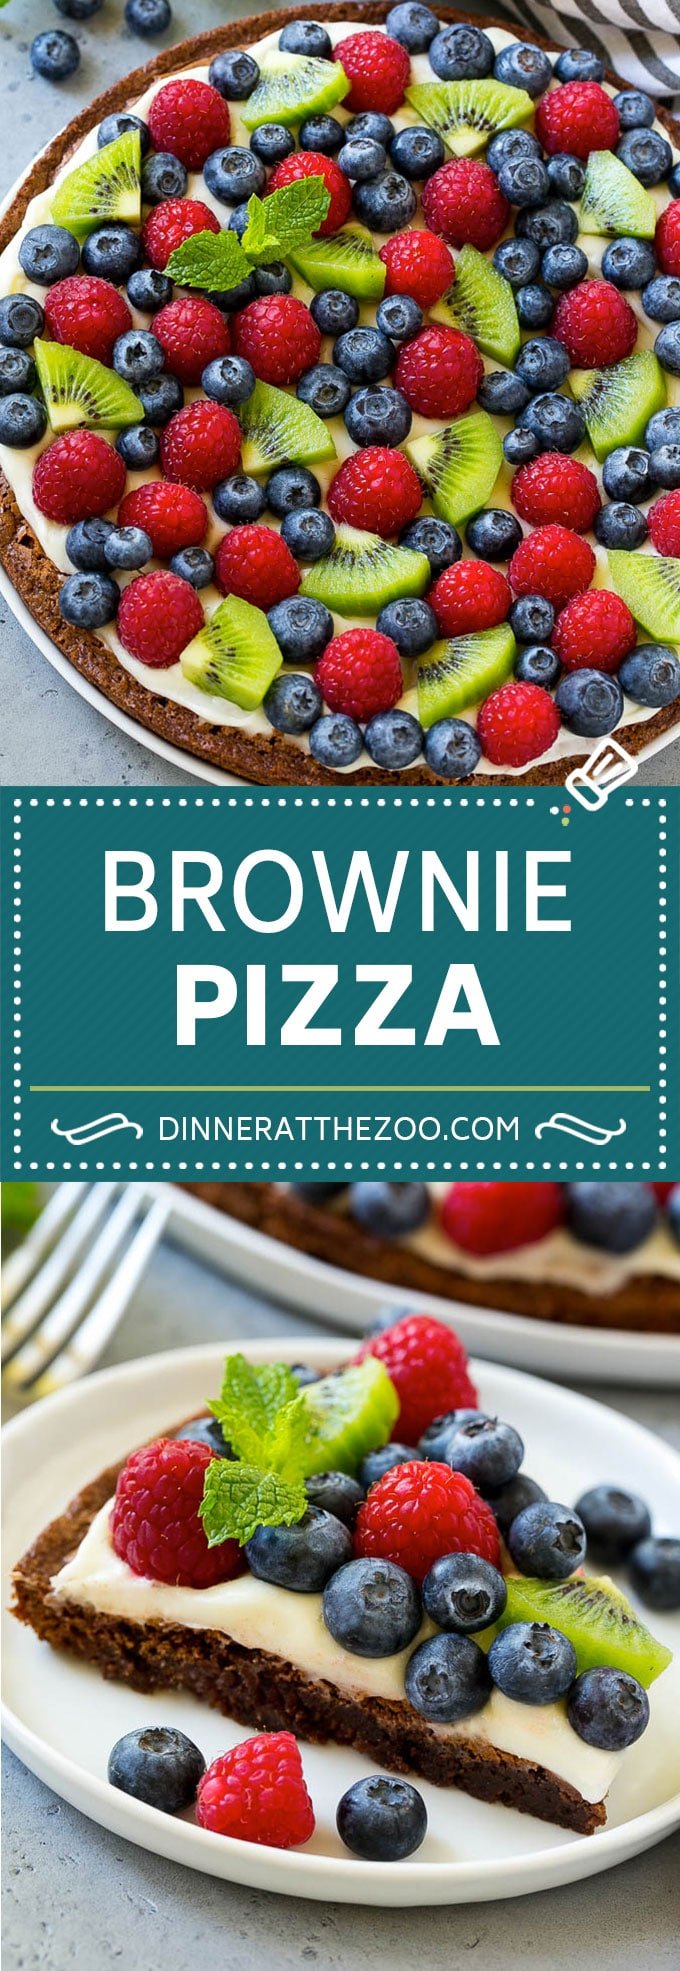 Brownie Pizza Recipe | Fruit Pizza | Dessert Pizza #brownie #pizza #chocolate #fruit #dessert #dinneratthezoo